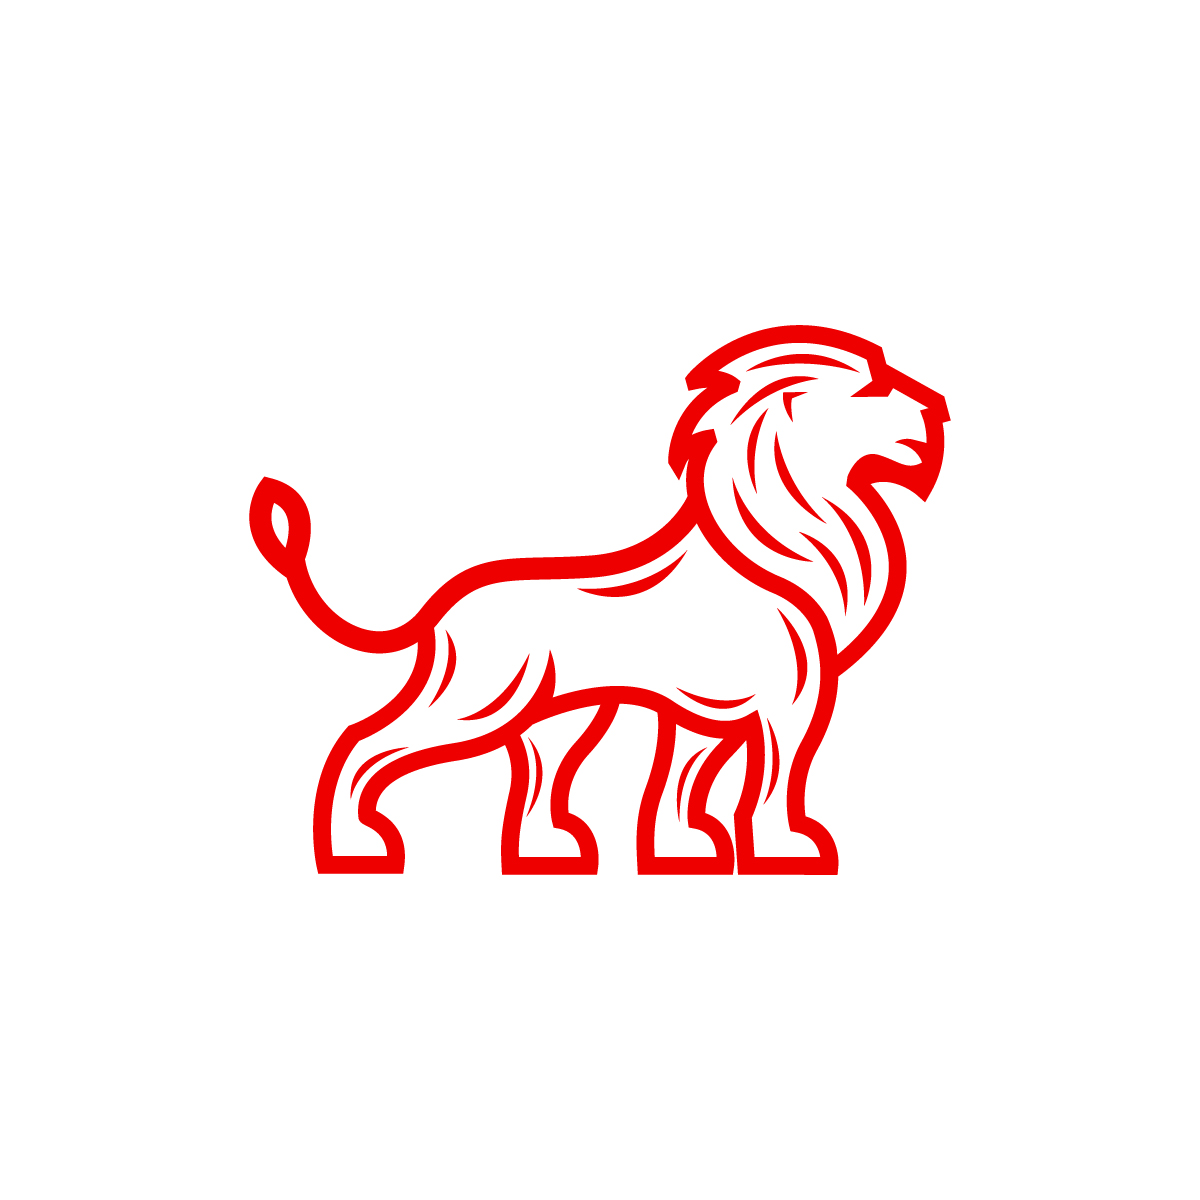 red lion animal